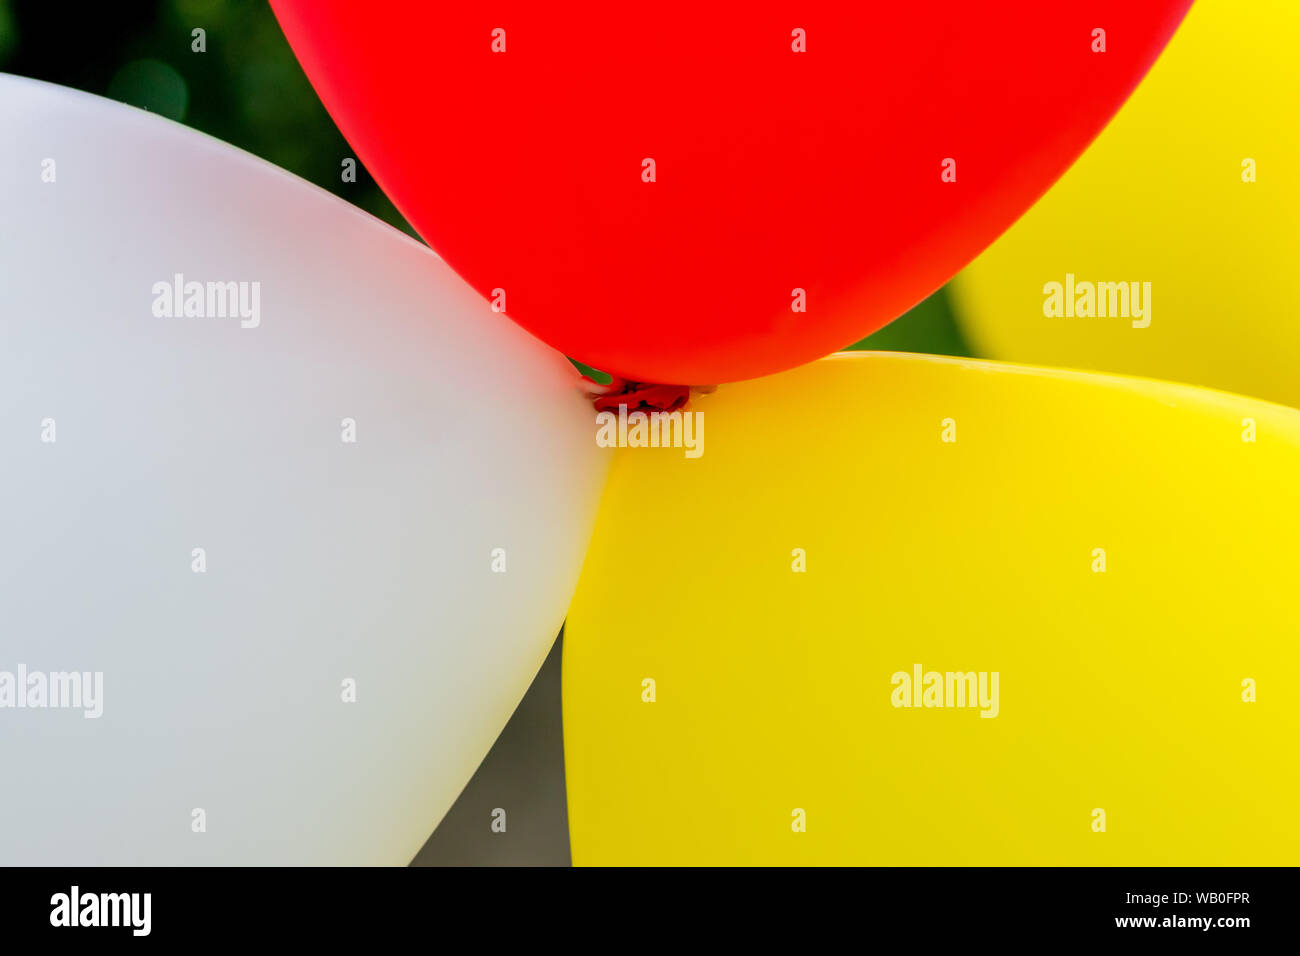 Smart & Green - Ballon lumineux LED « Bubble » multicolore et